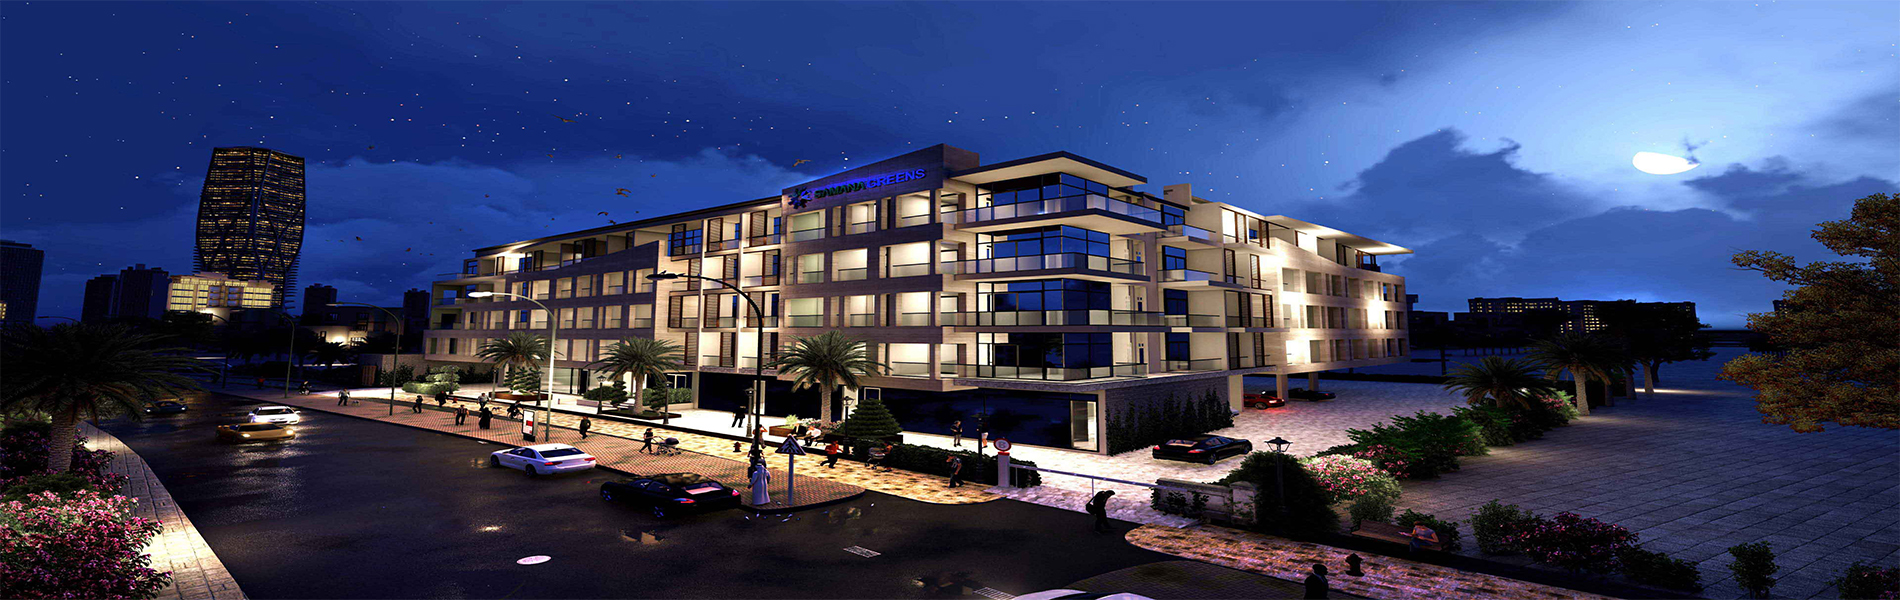 Samana greens apartment at arjan dubailand for sale by samana developers